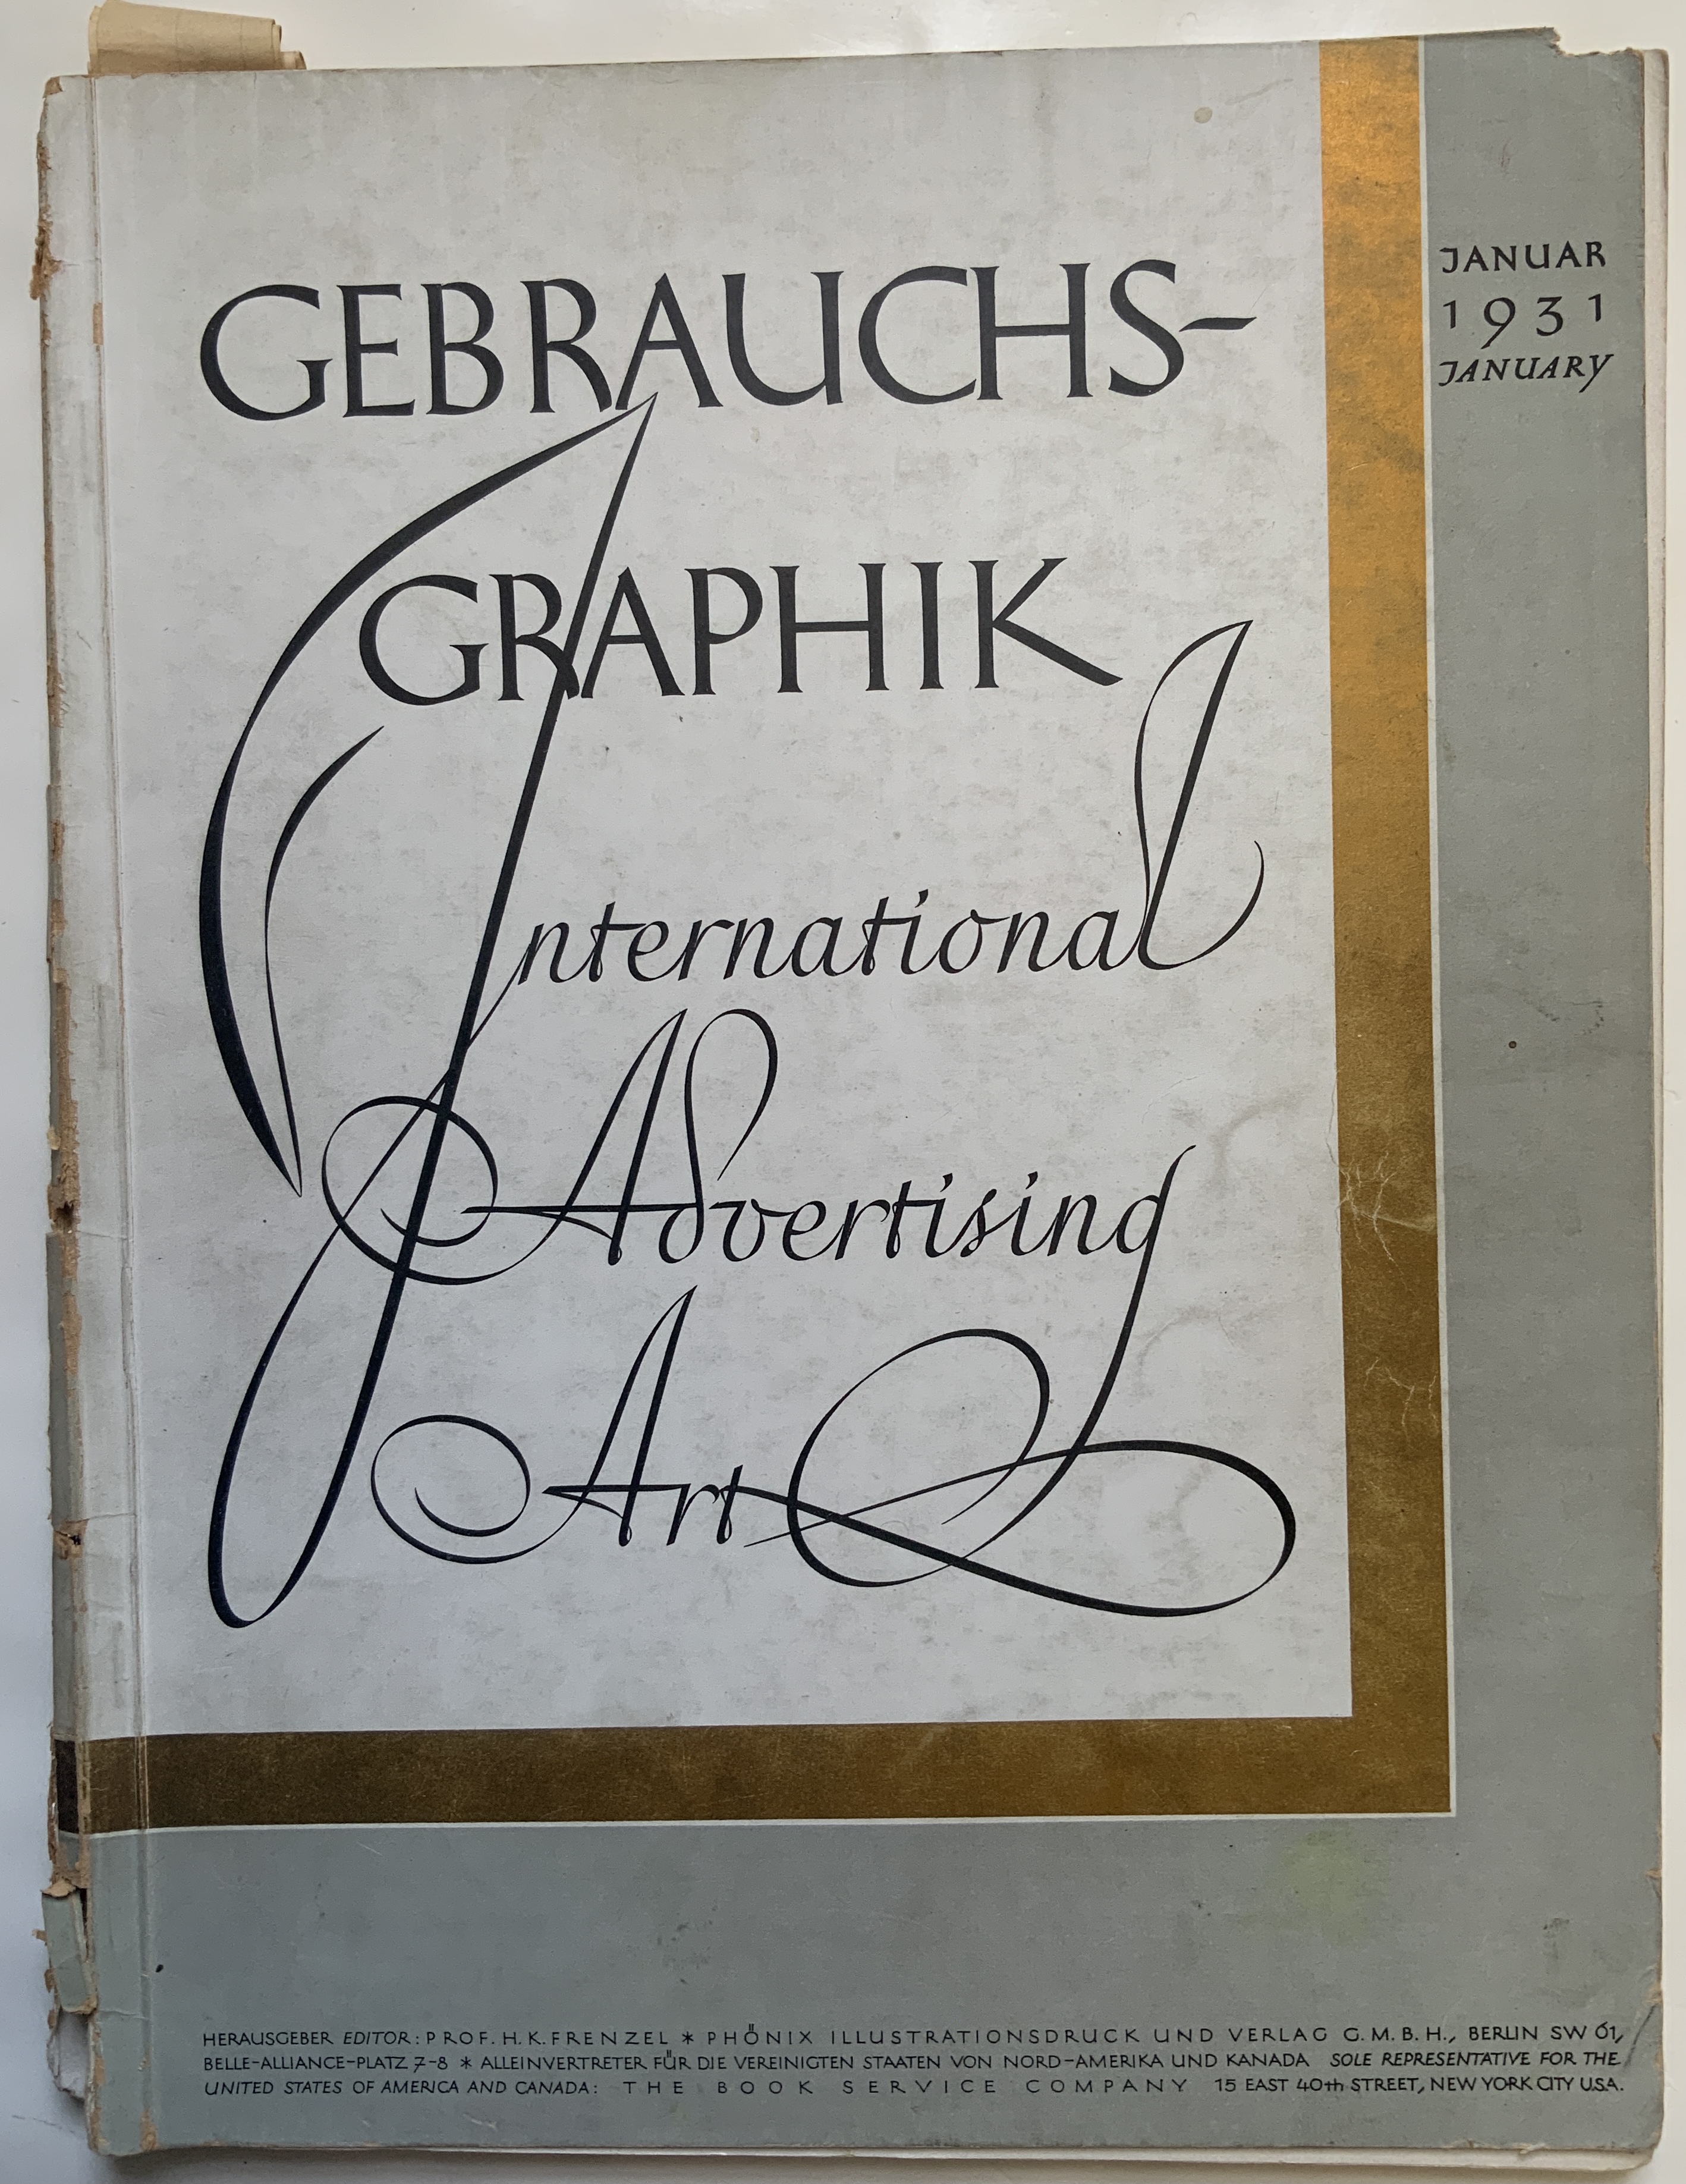 WW096	GEBRAUCHSGRAPHIK INTERNATIONAL ADVERTISING ART JANUARY 1931